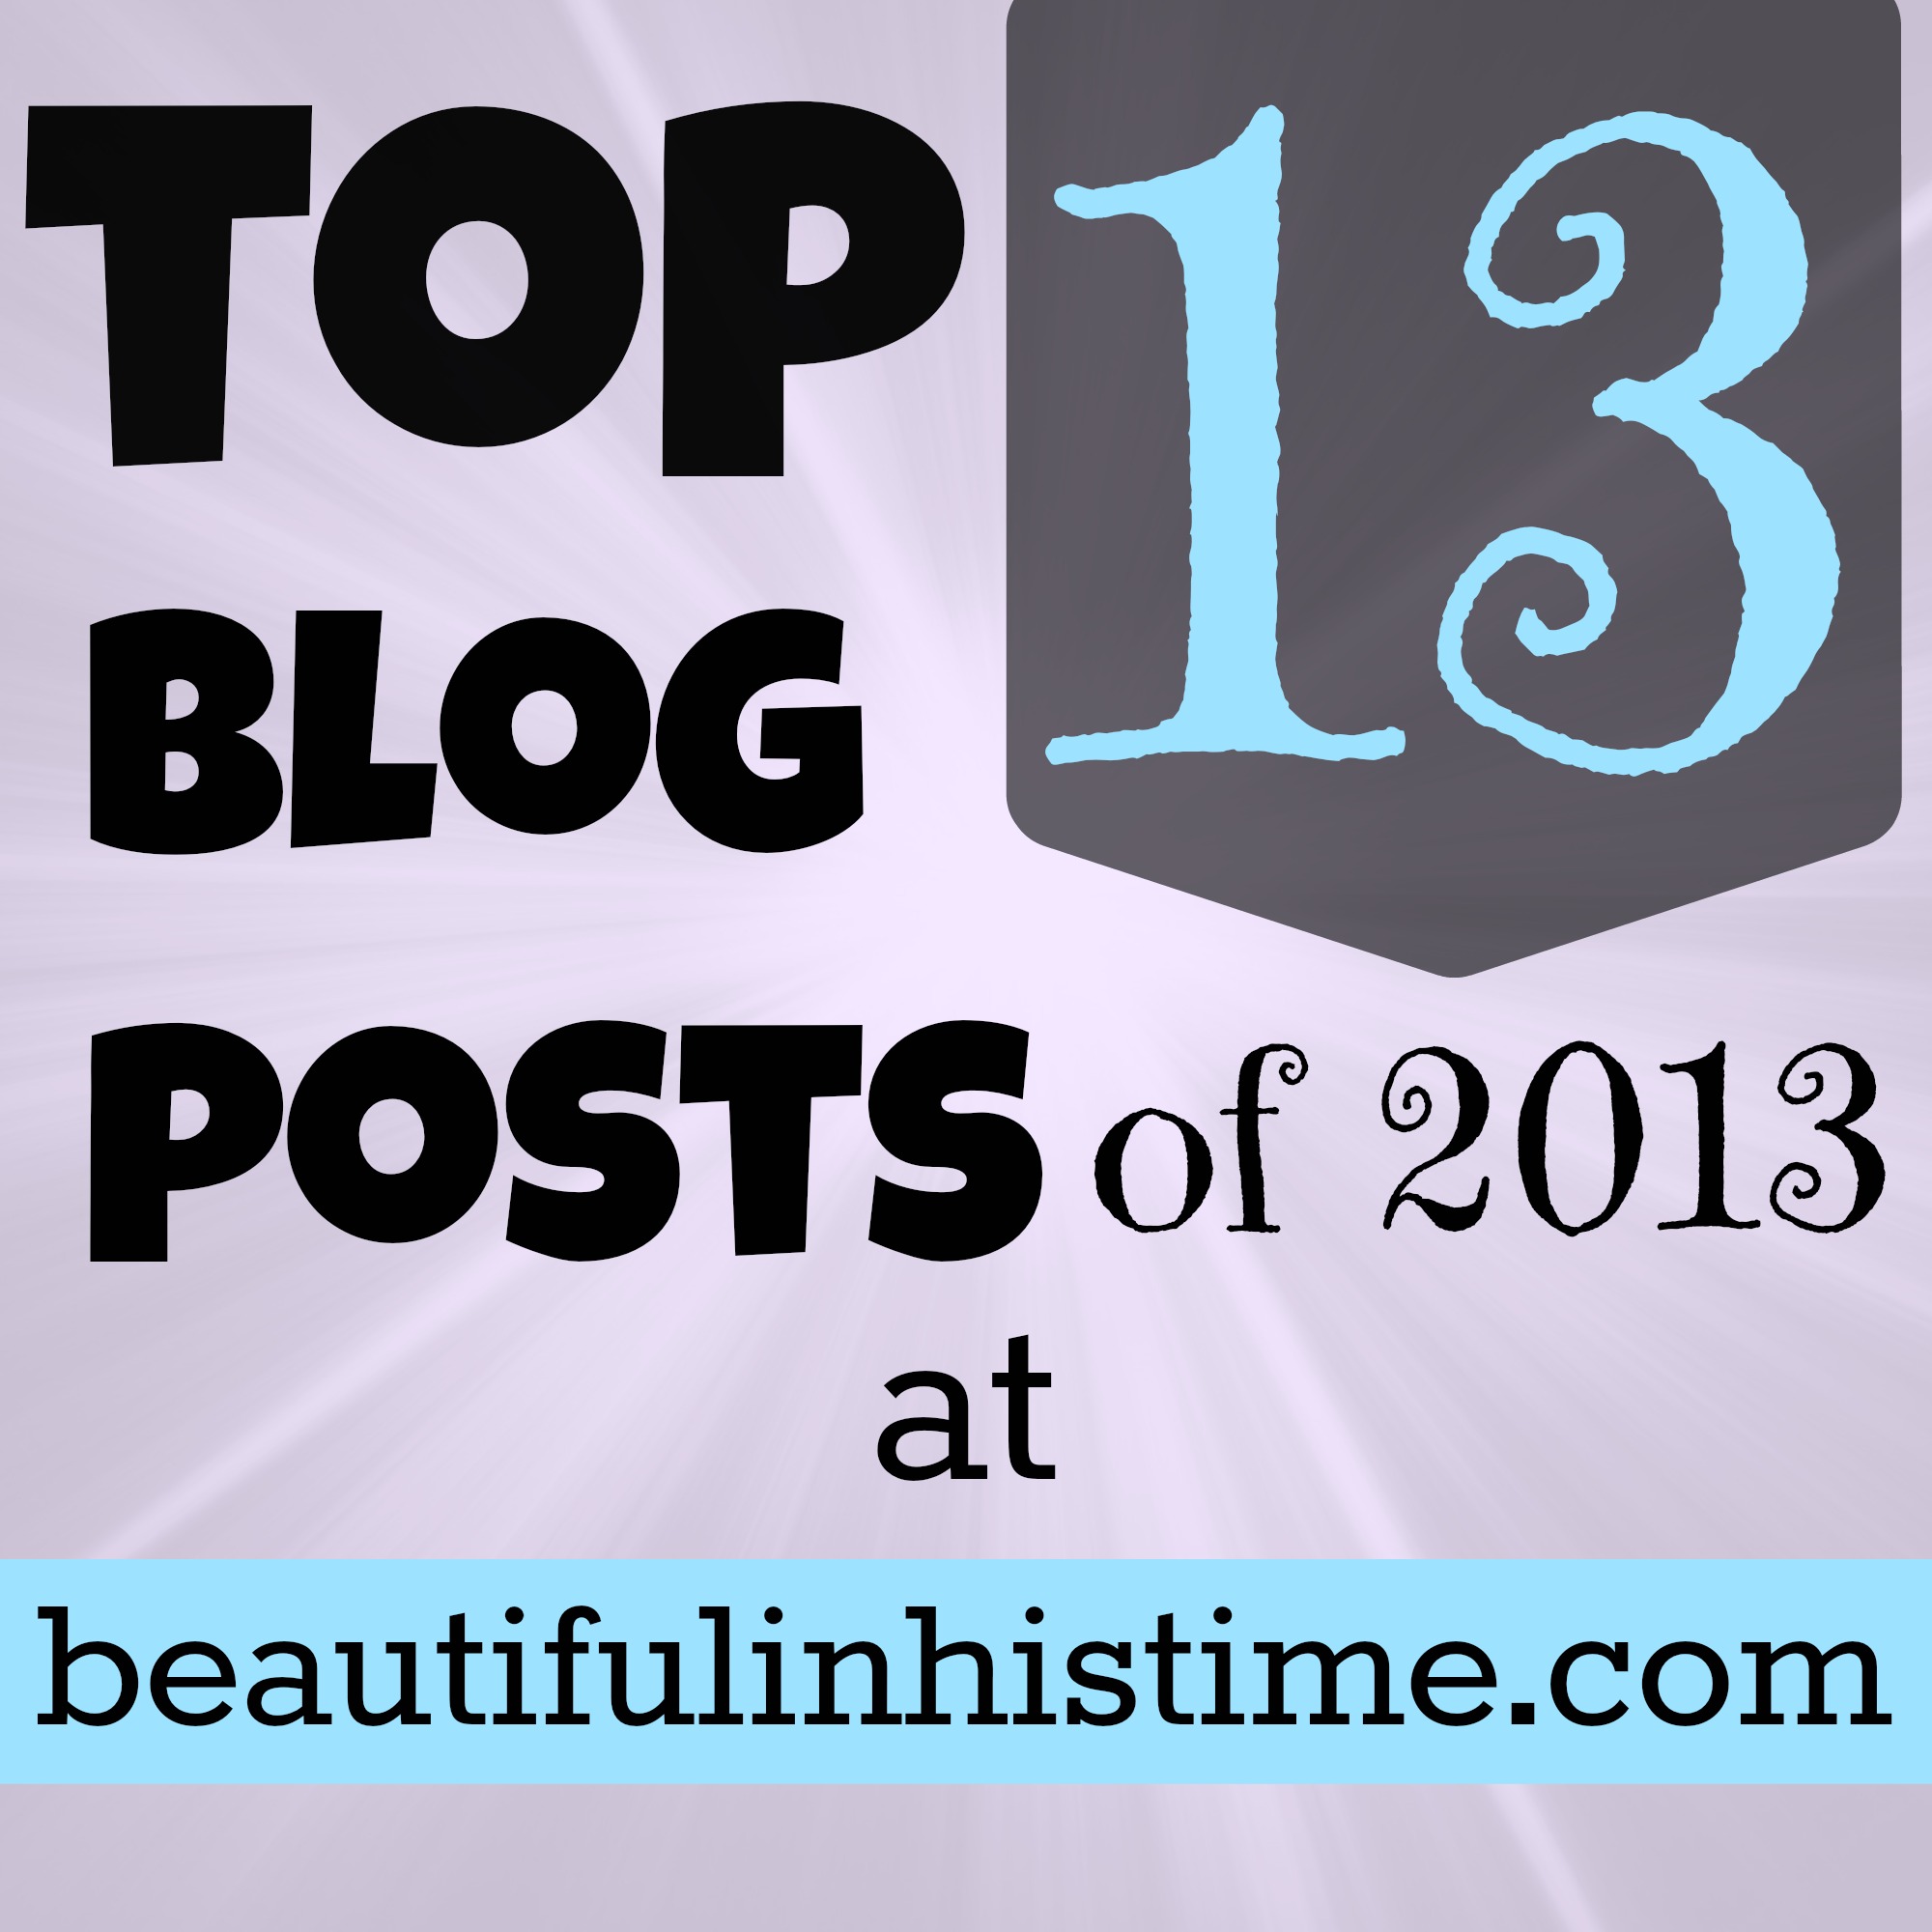 Top 13 posts of 2013 at beautifulinhistime.com